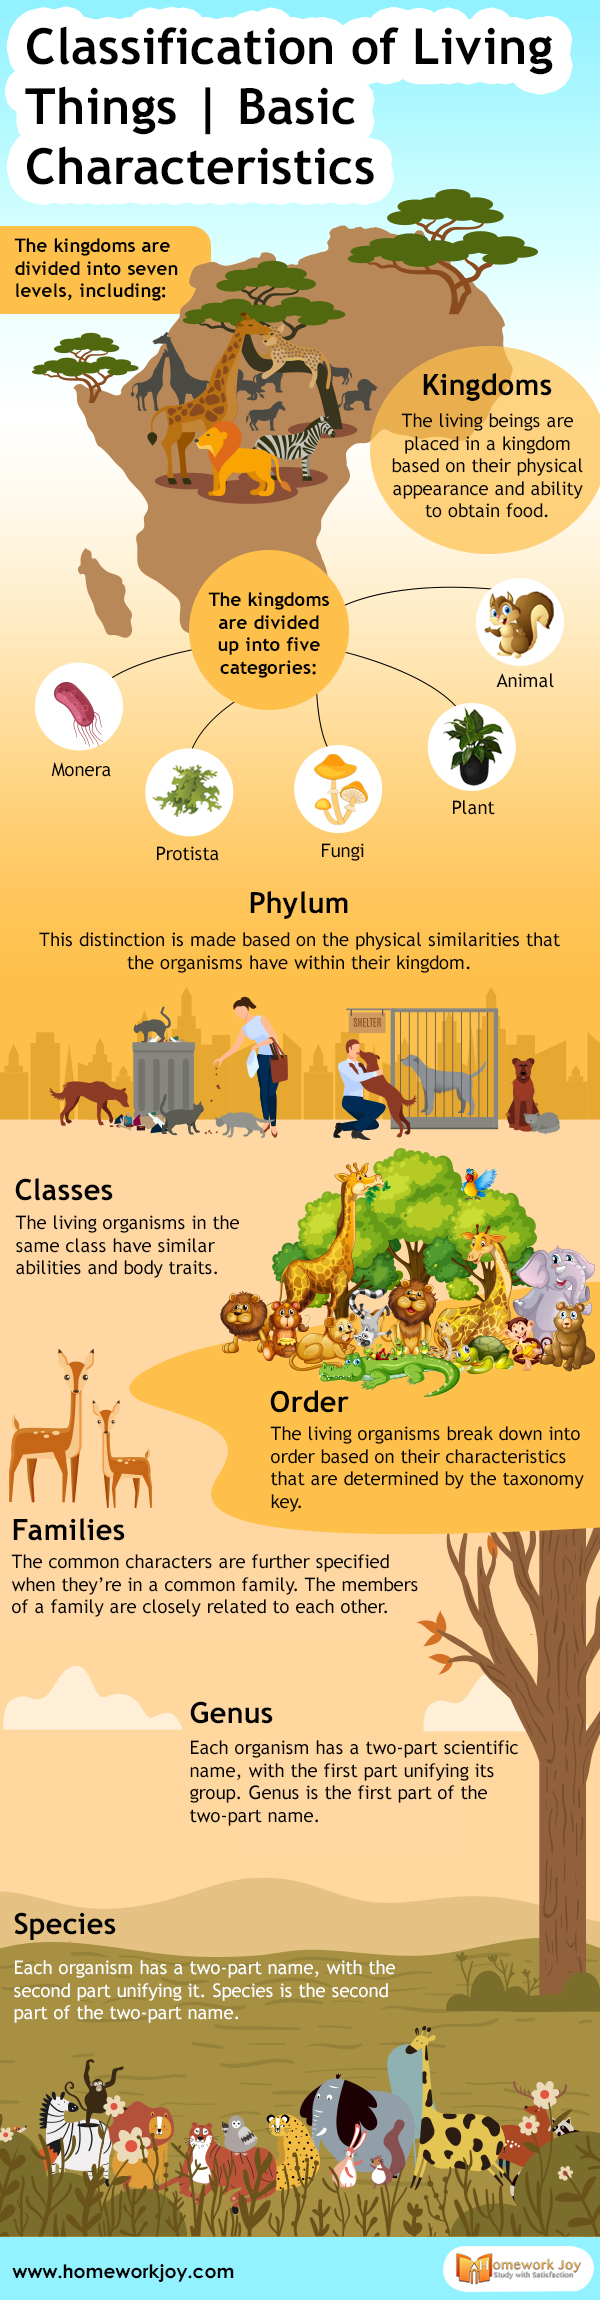 Classification of Living Things Basic Characteristics